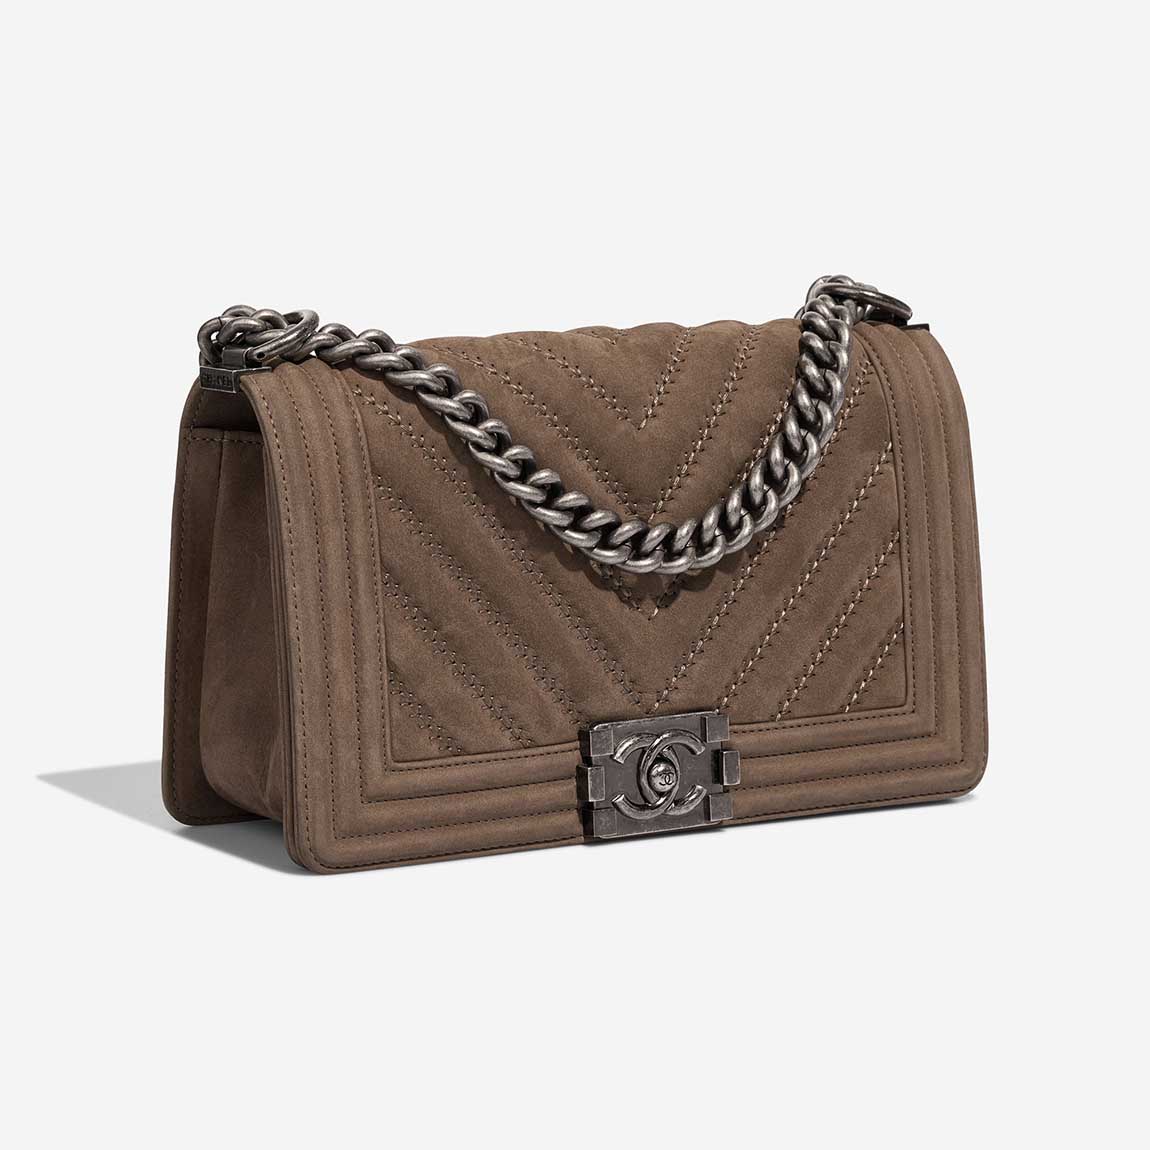 Chanel Boy Old Medium Suede Brown | Sell your designer bag